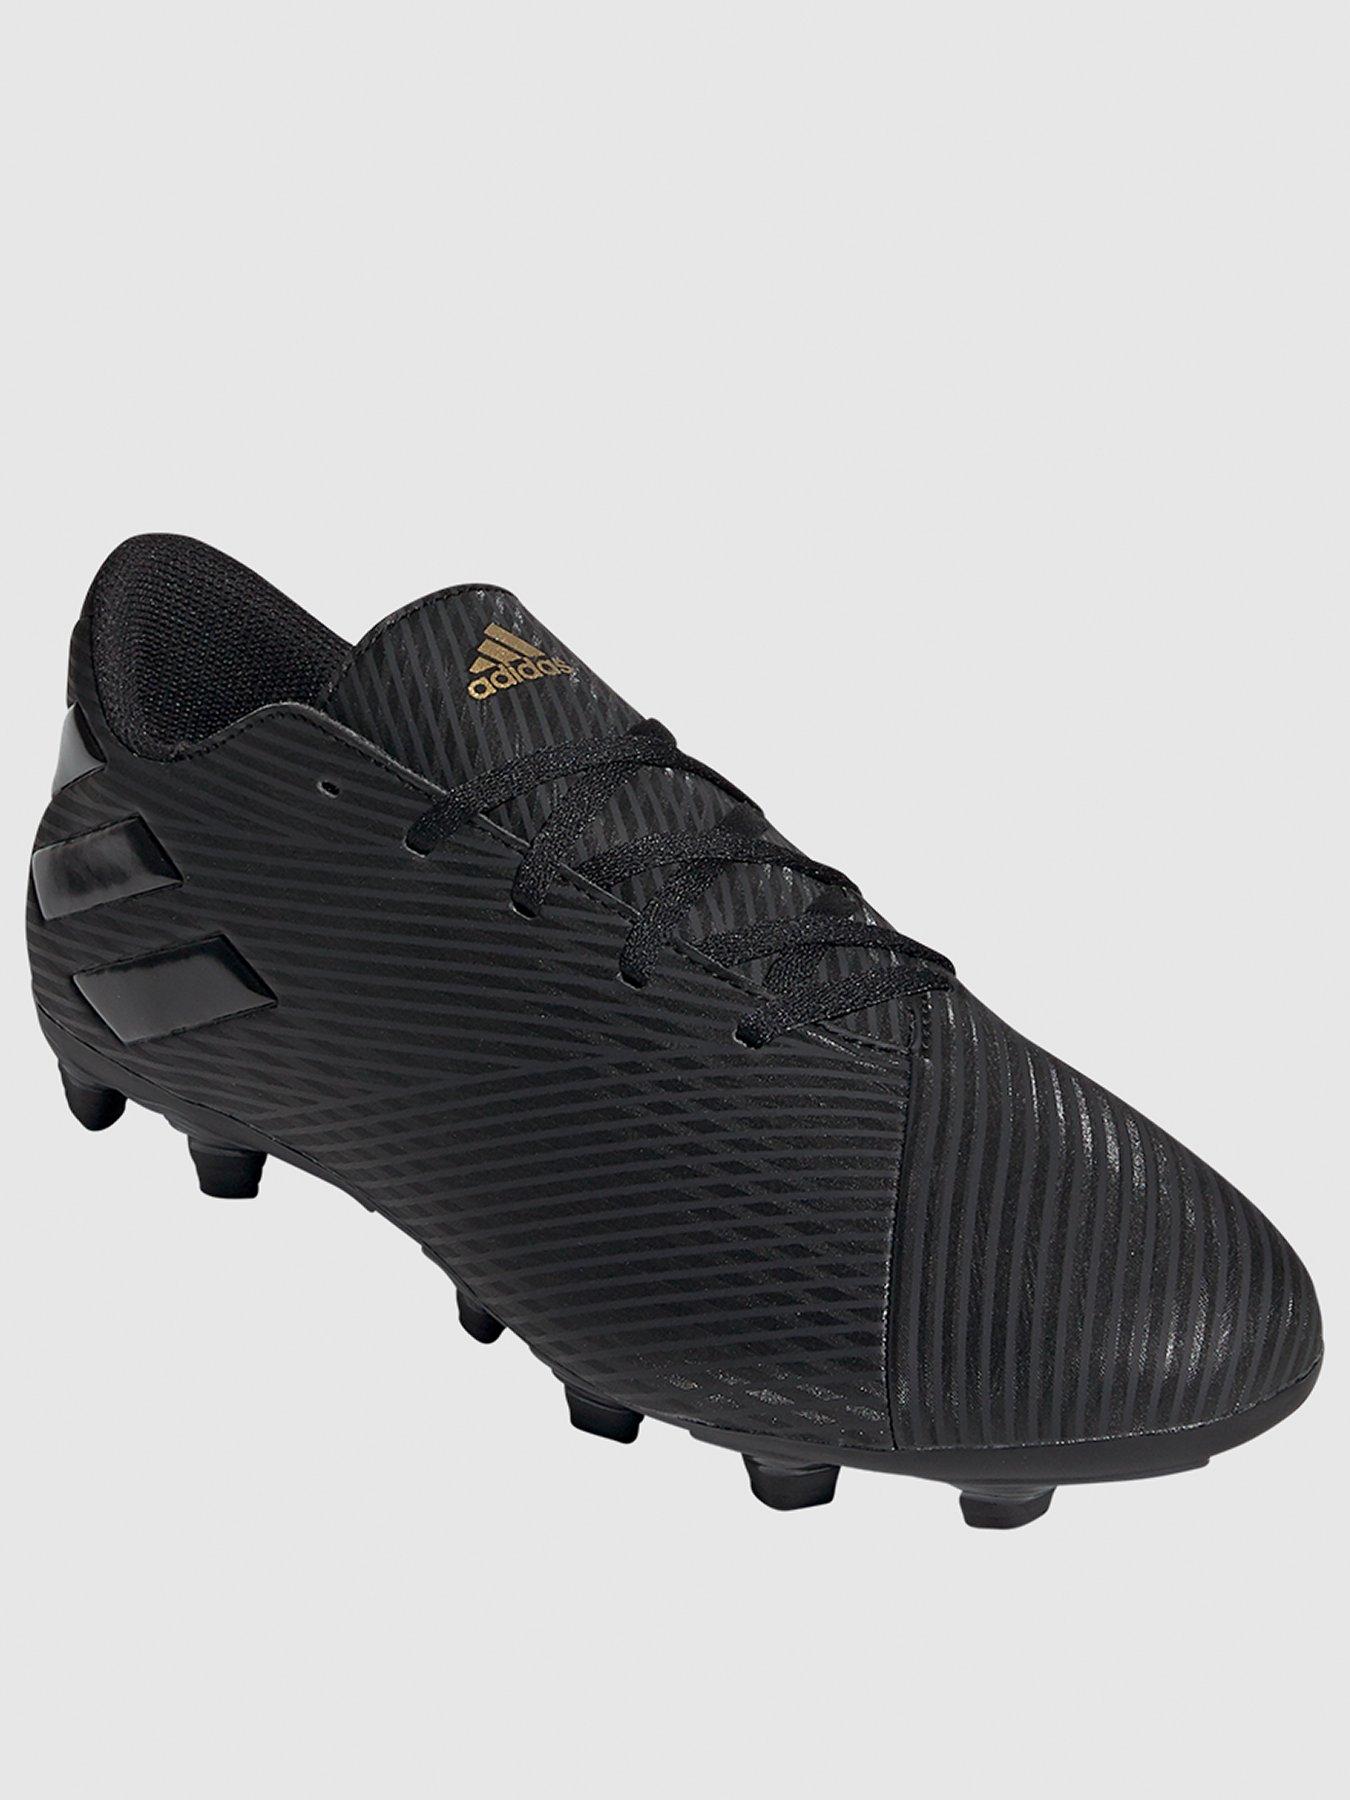 adidas football boots black